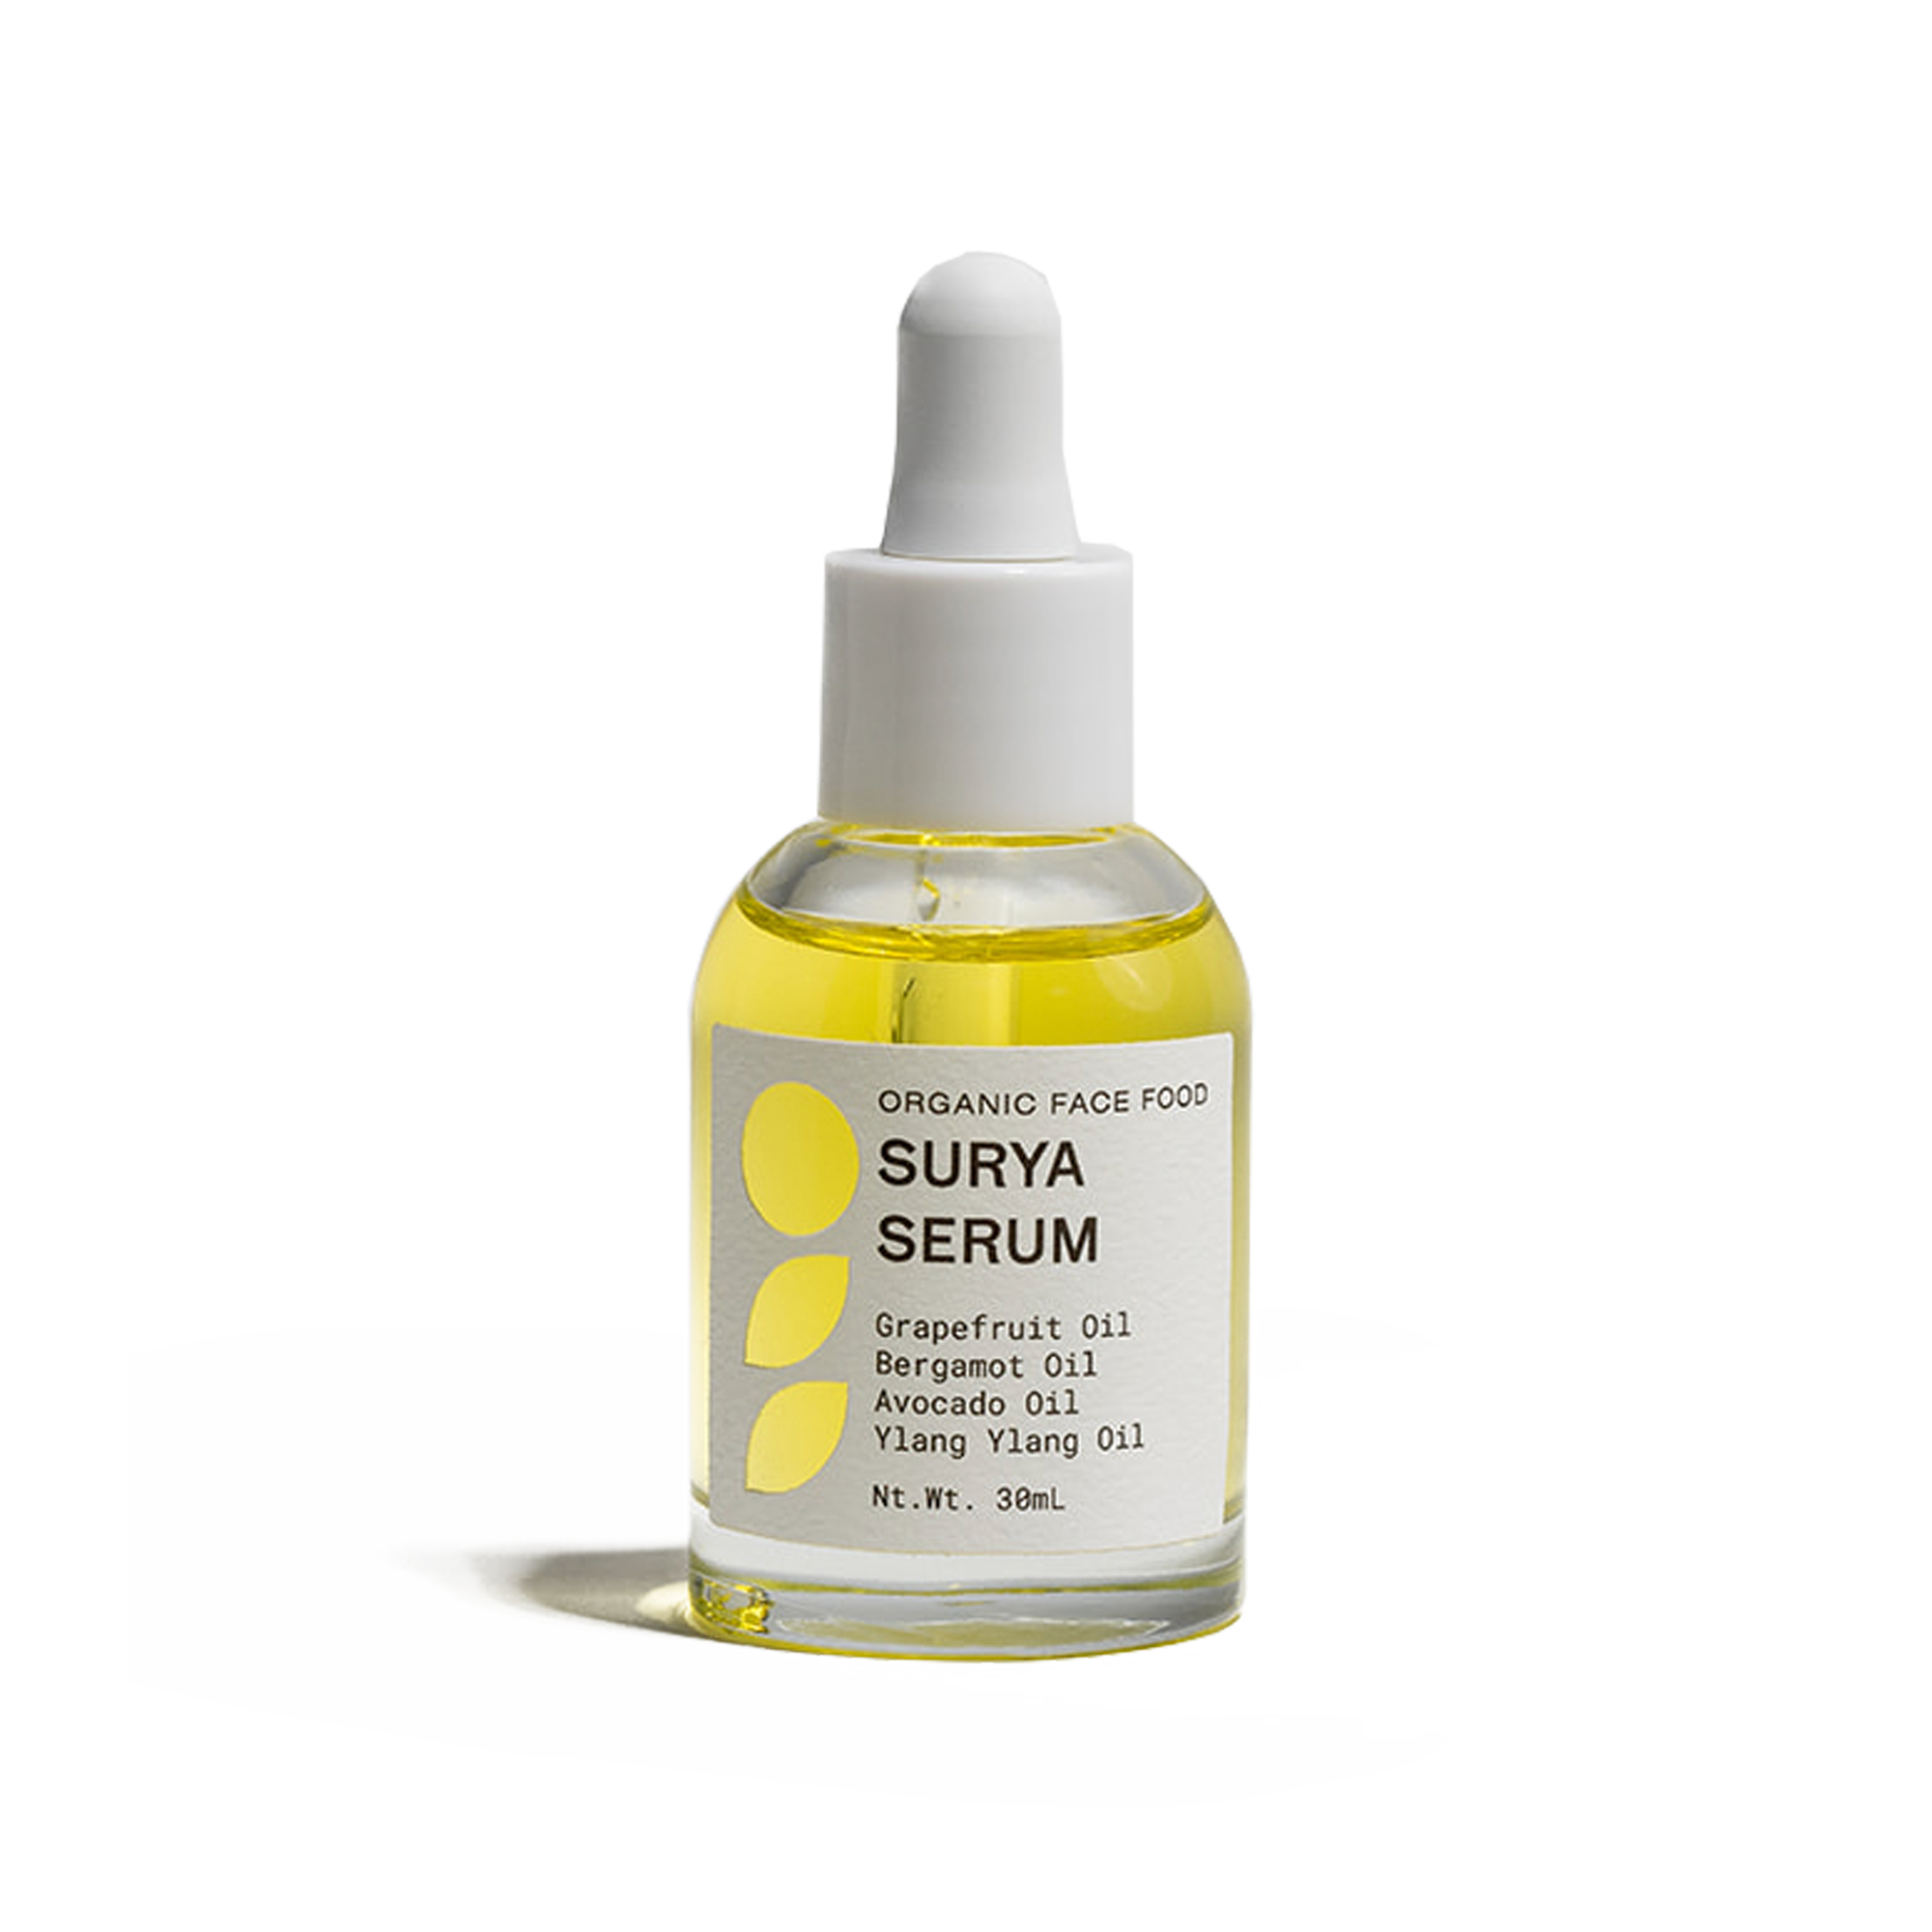 Surya Serum | Tissue Repair Face Oil with Arnica & Avocado Oil